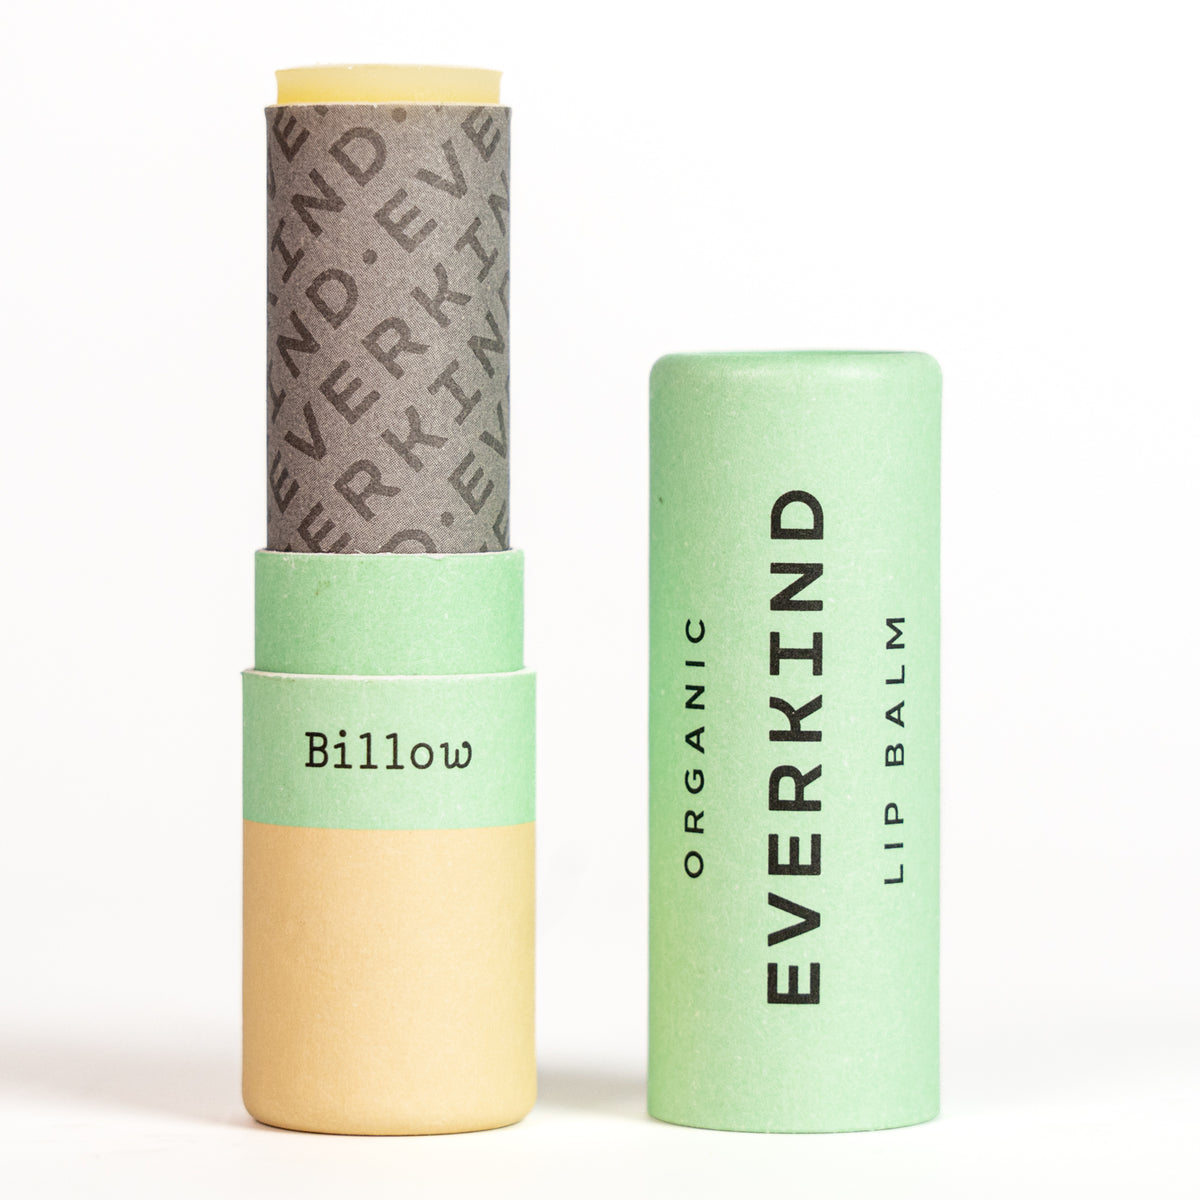 Everkind organic natural lip balm Billow, certified organic, cruelty free, and zero waste.